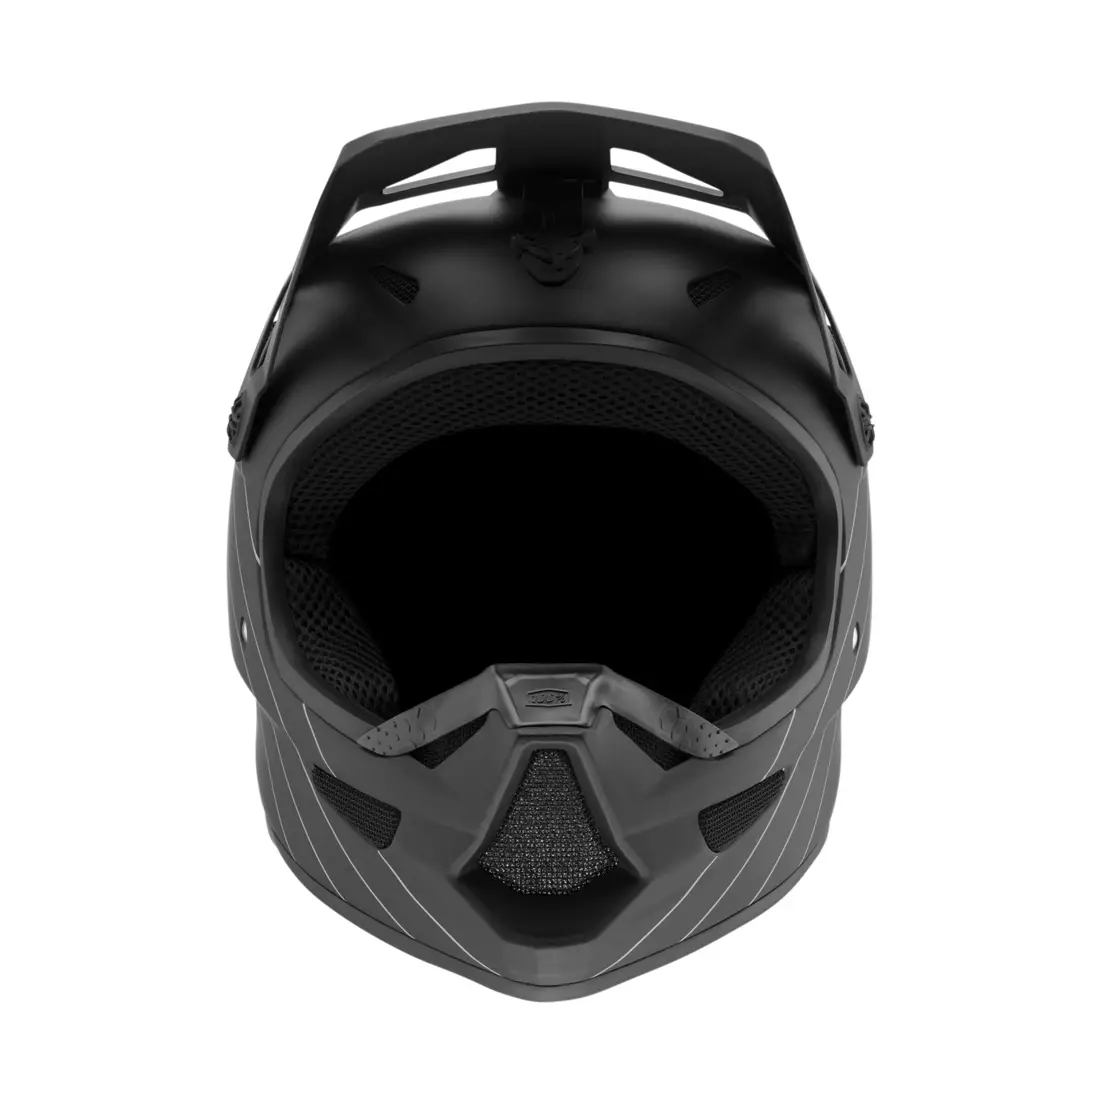 100% cască de bicicletă full face STATUS DH/BMX Helmet Essential black STO-80011-001-09